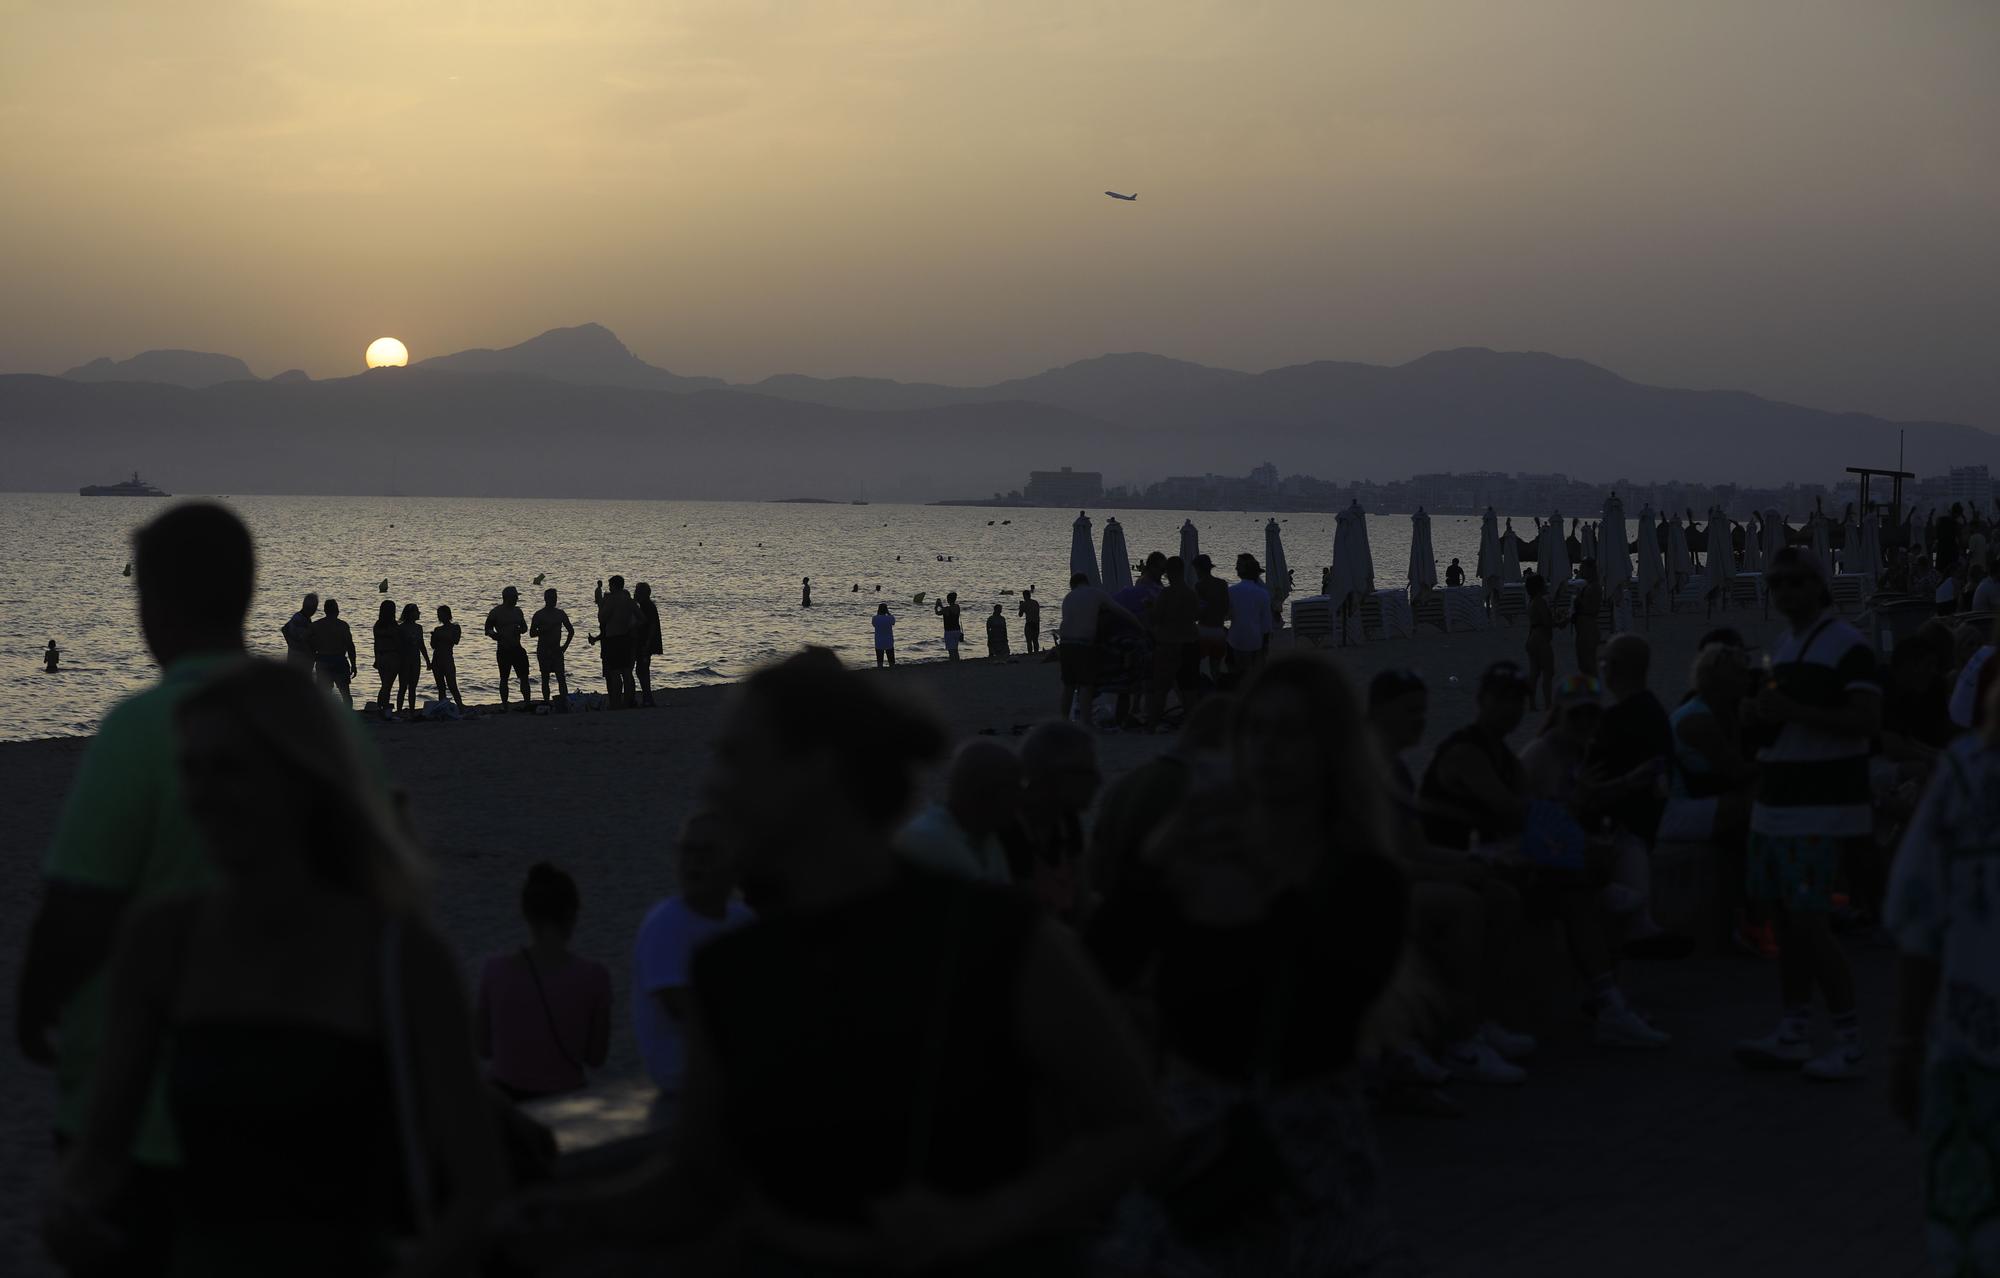 Sonntagabend an der Playa de Palma – den Urlaubstag auf Mallorca entspannt am Strand ausklingen lassen